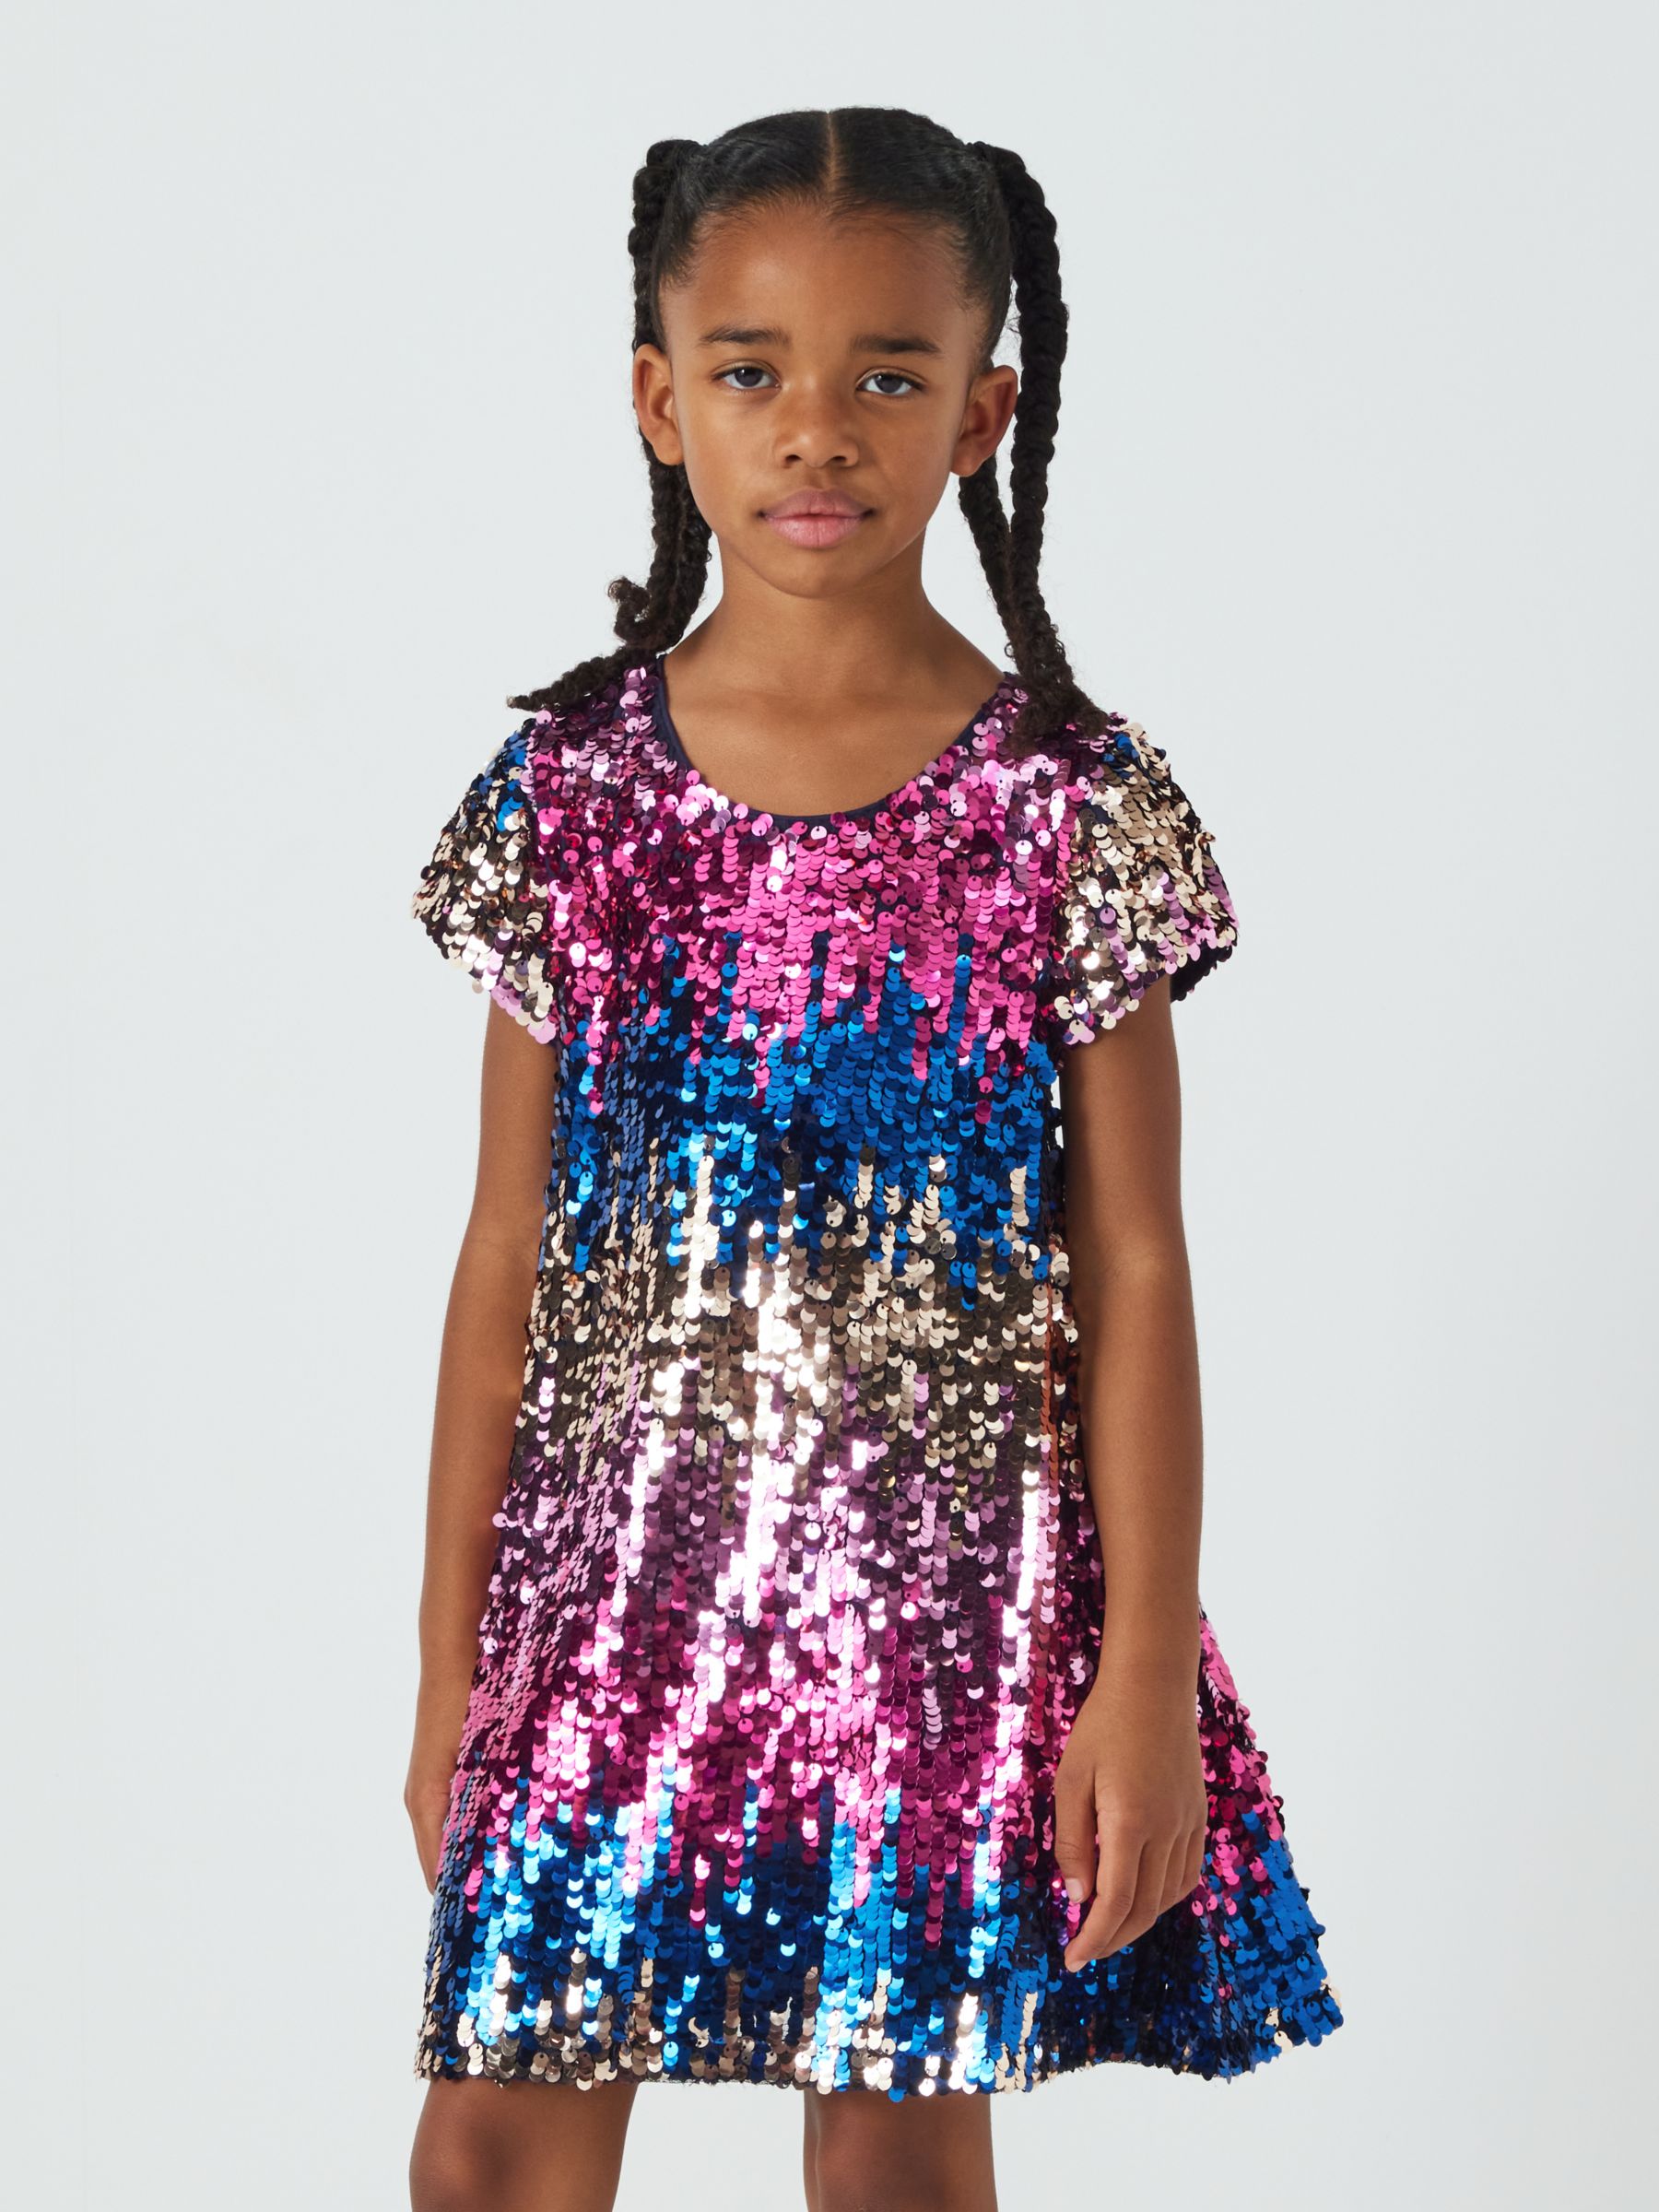 John Lewis Kids' Ombre Sequin Party Dress, Multi at John Lewis & Partners